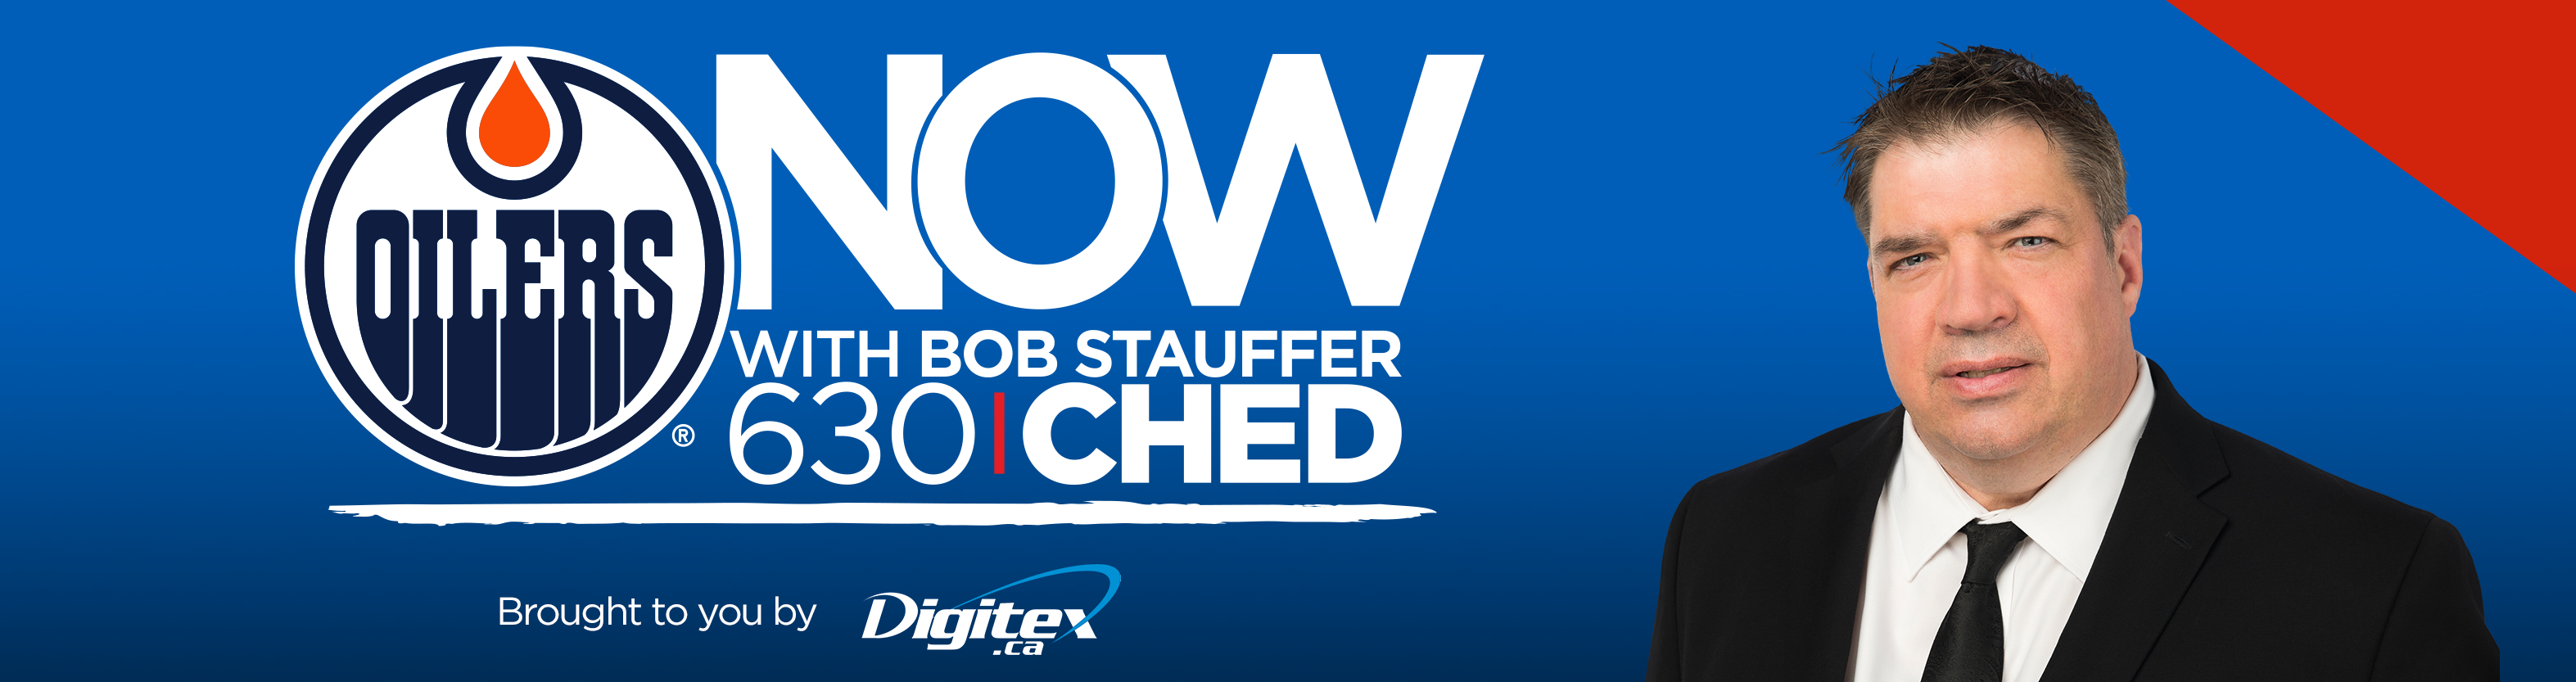 Oilers Now with Bob Stauffer Global News